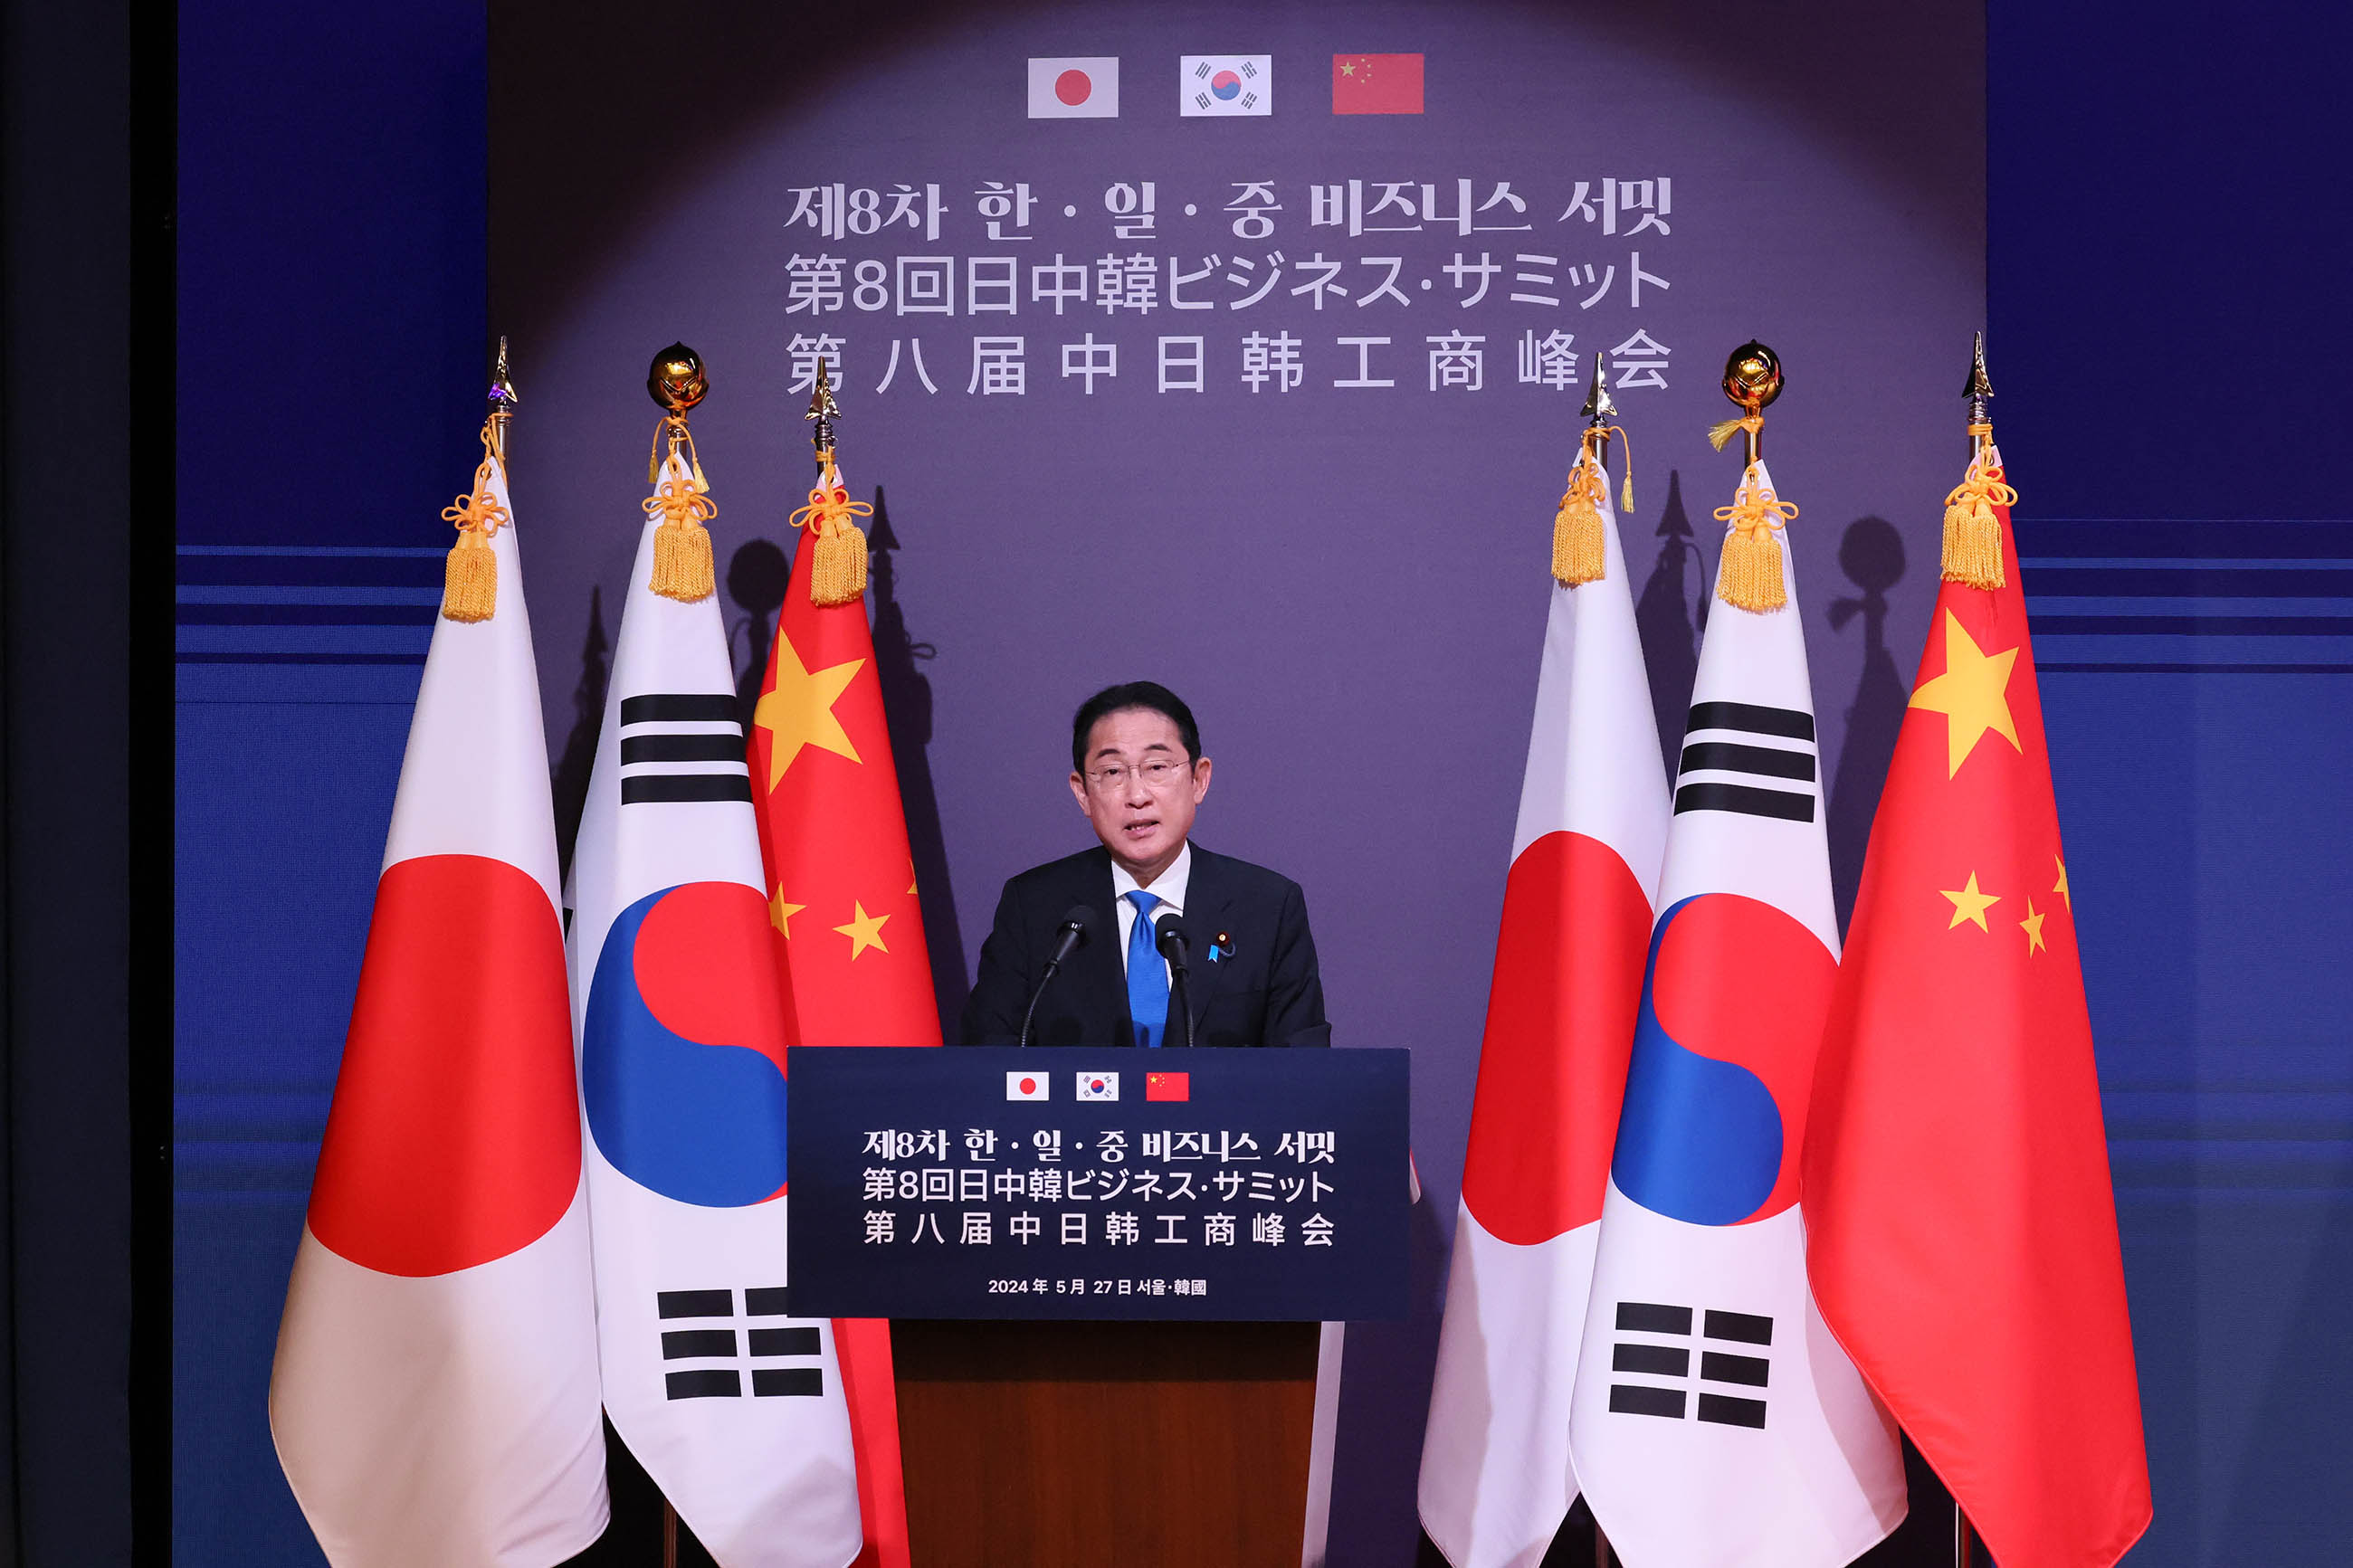 Prime Minister Kishida attending the Japan-China-ROK Business Summit (6)